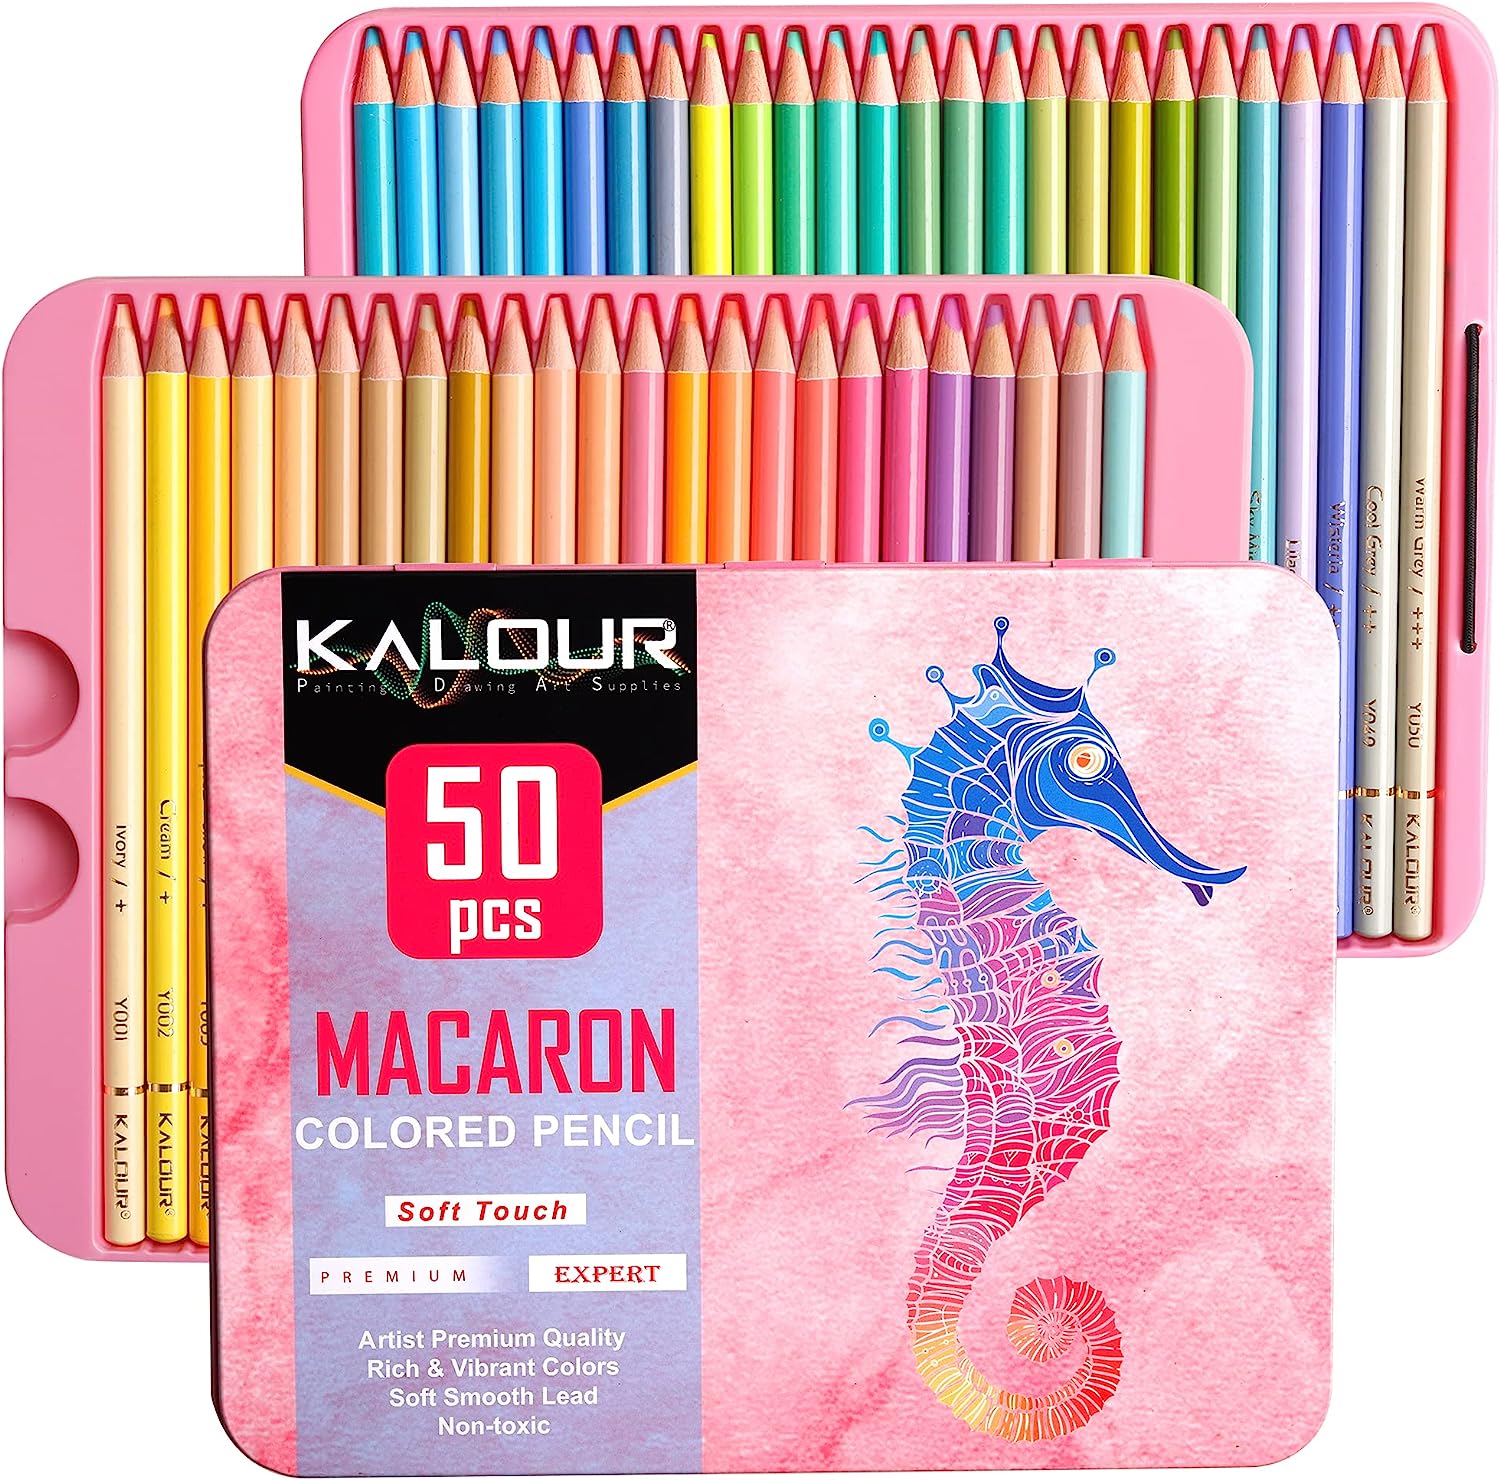 180 Colored Pencils, Art Soft Core Coloring Pencils Set with 1